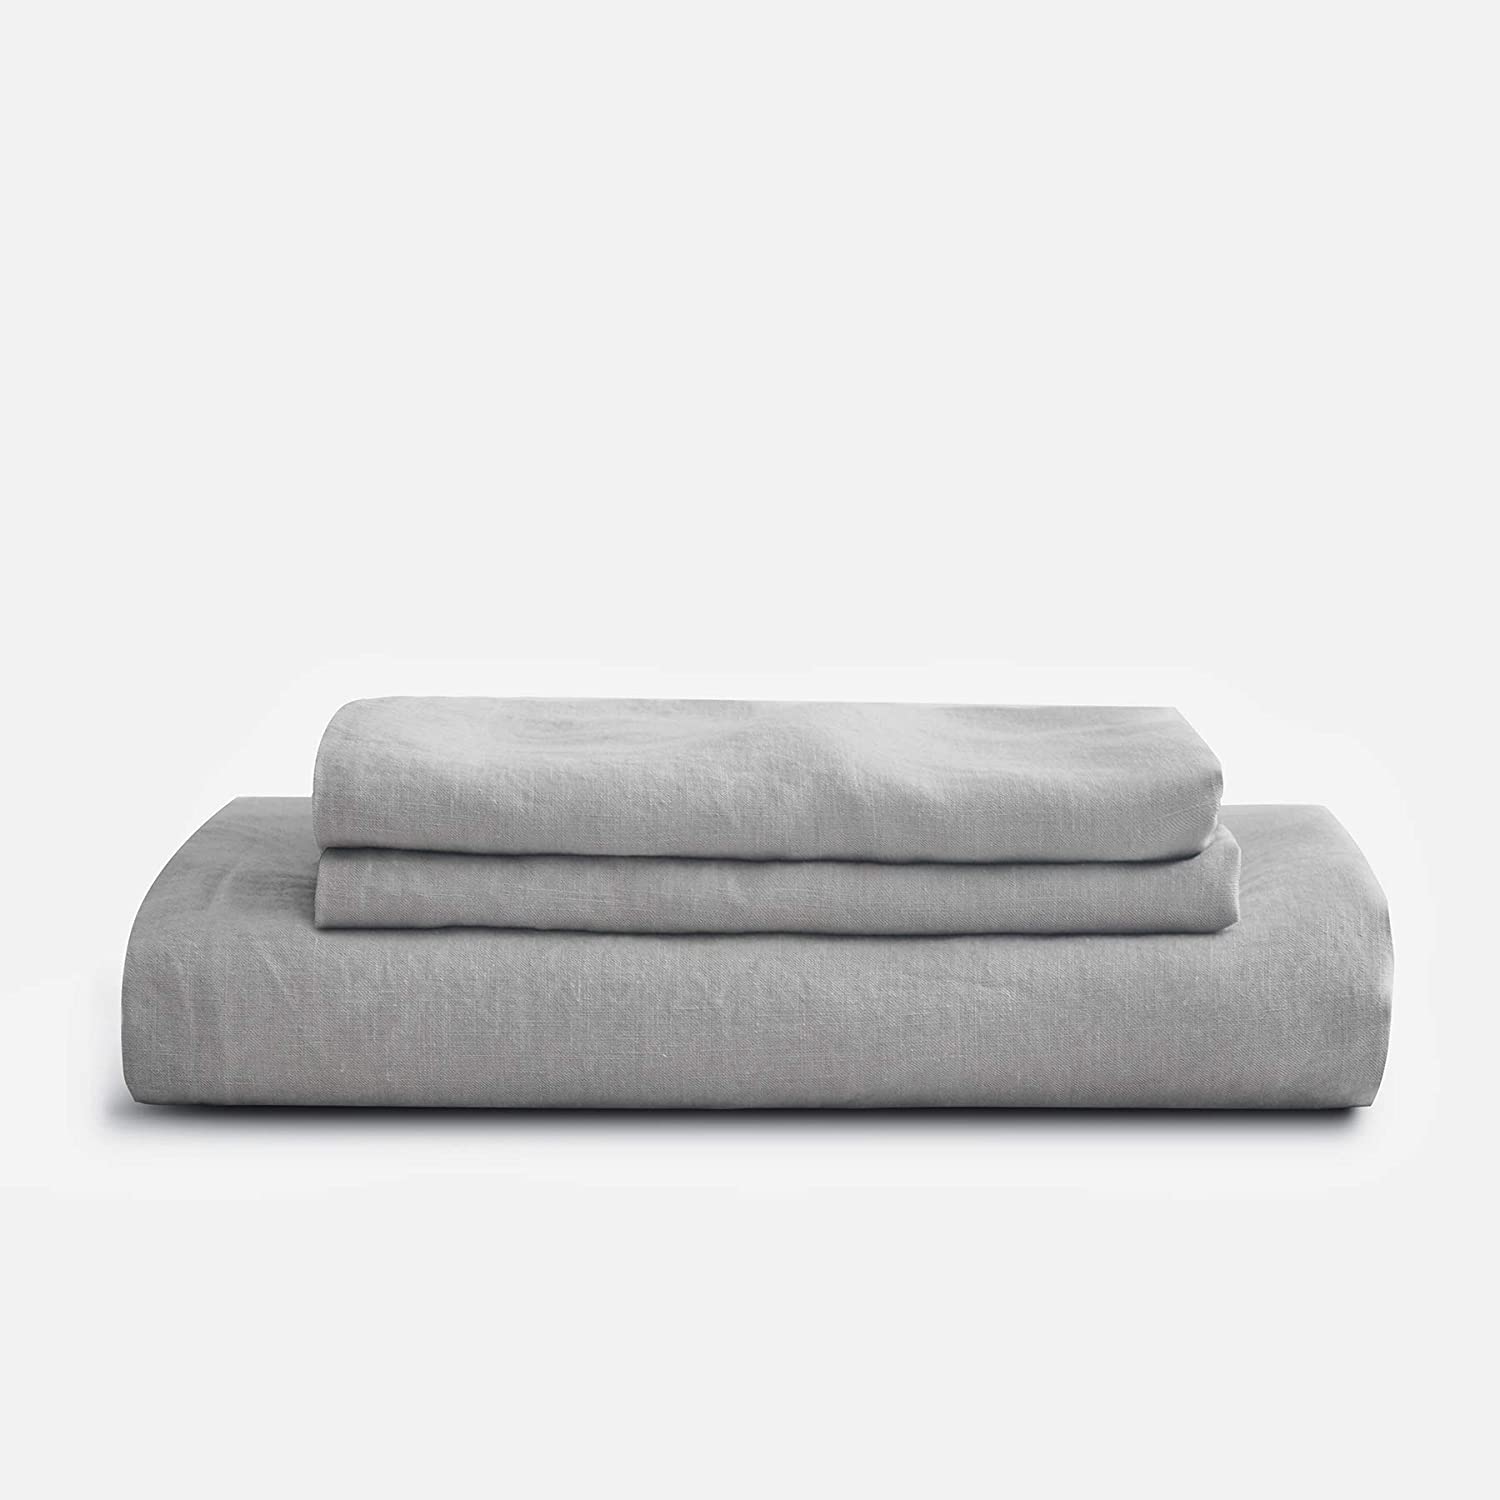 Sijo Premium Stone French Linen Bed Sheet Set